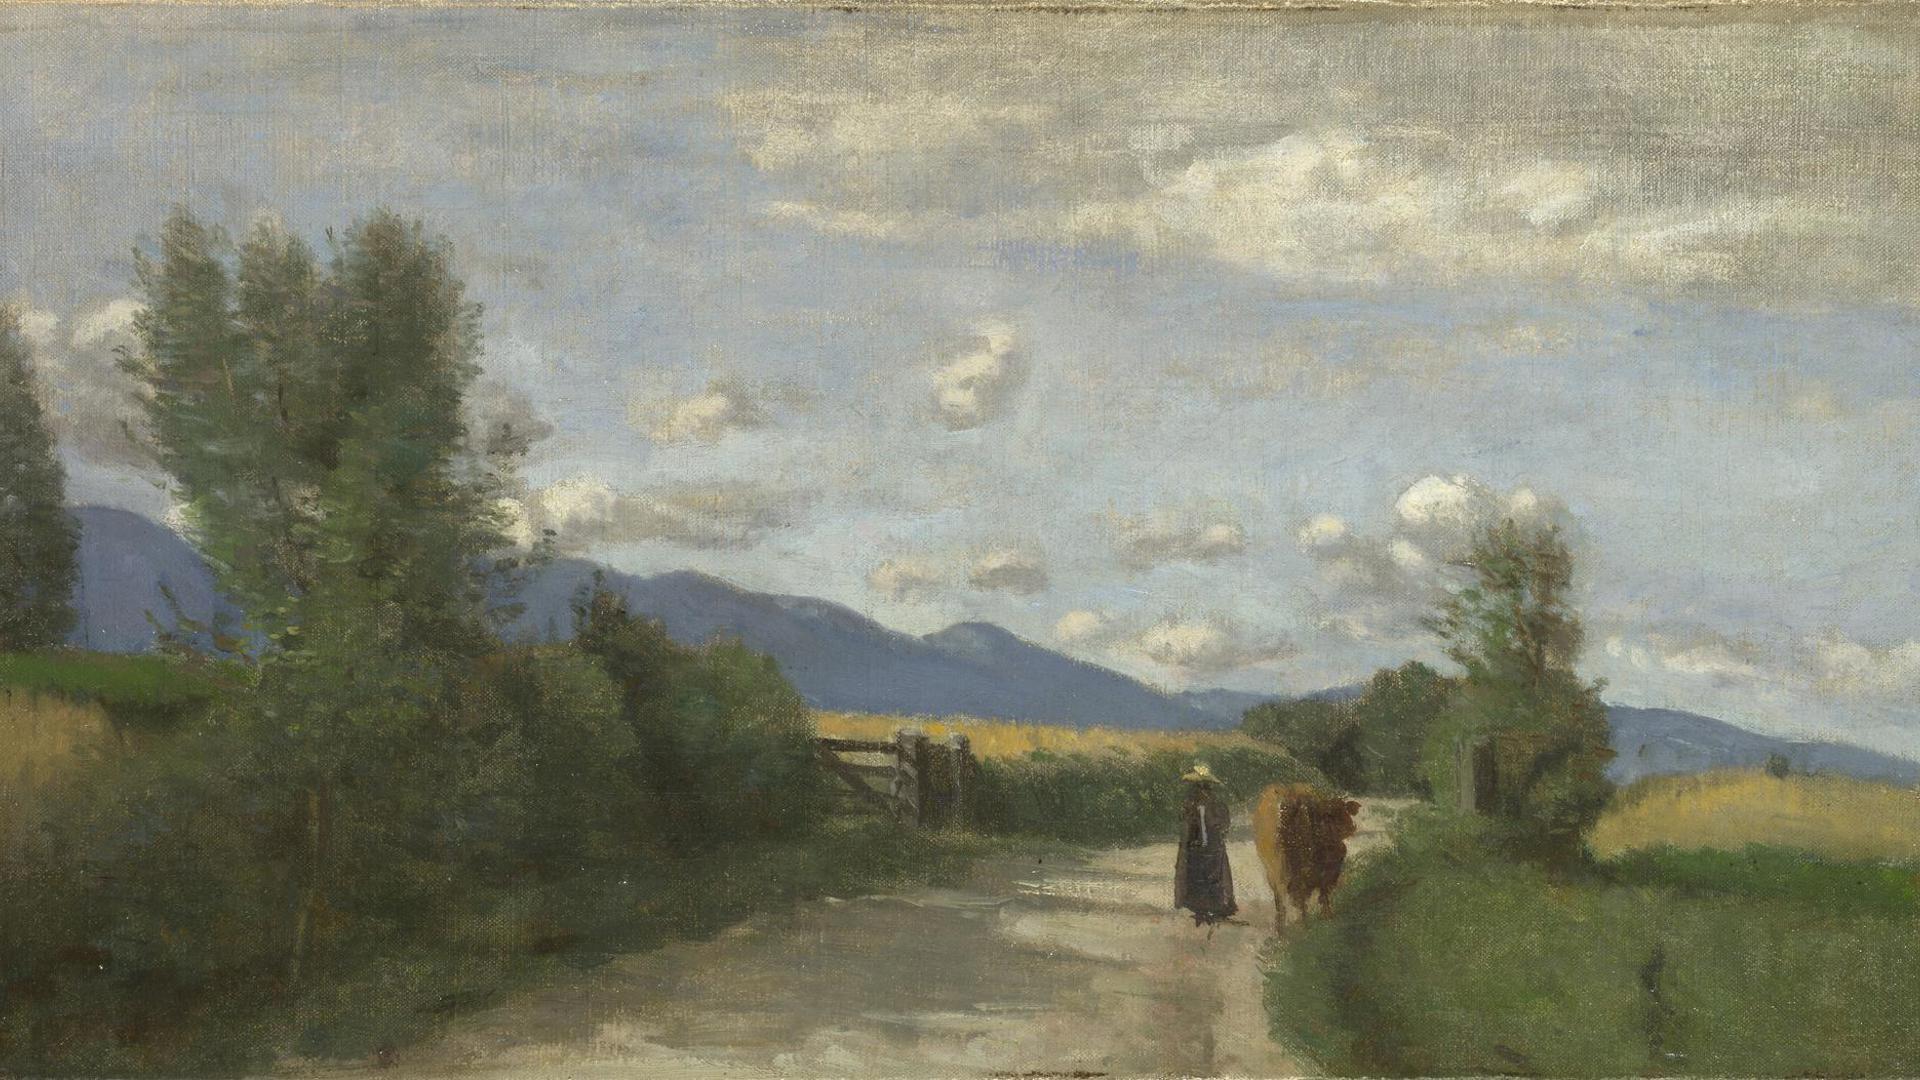 Dardagny, Morning by Jean-Baptiste-Camille Corot